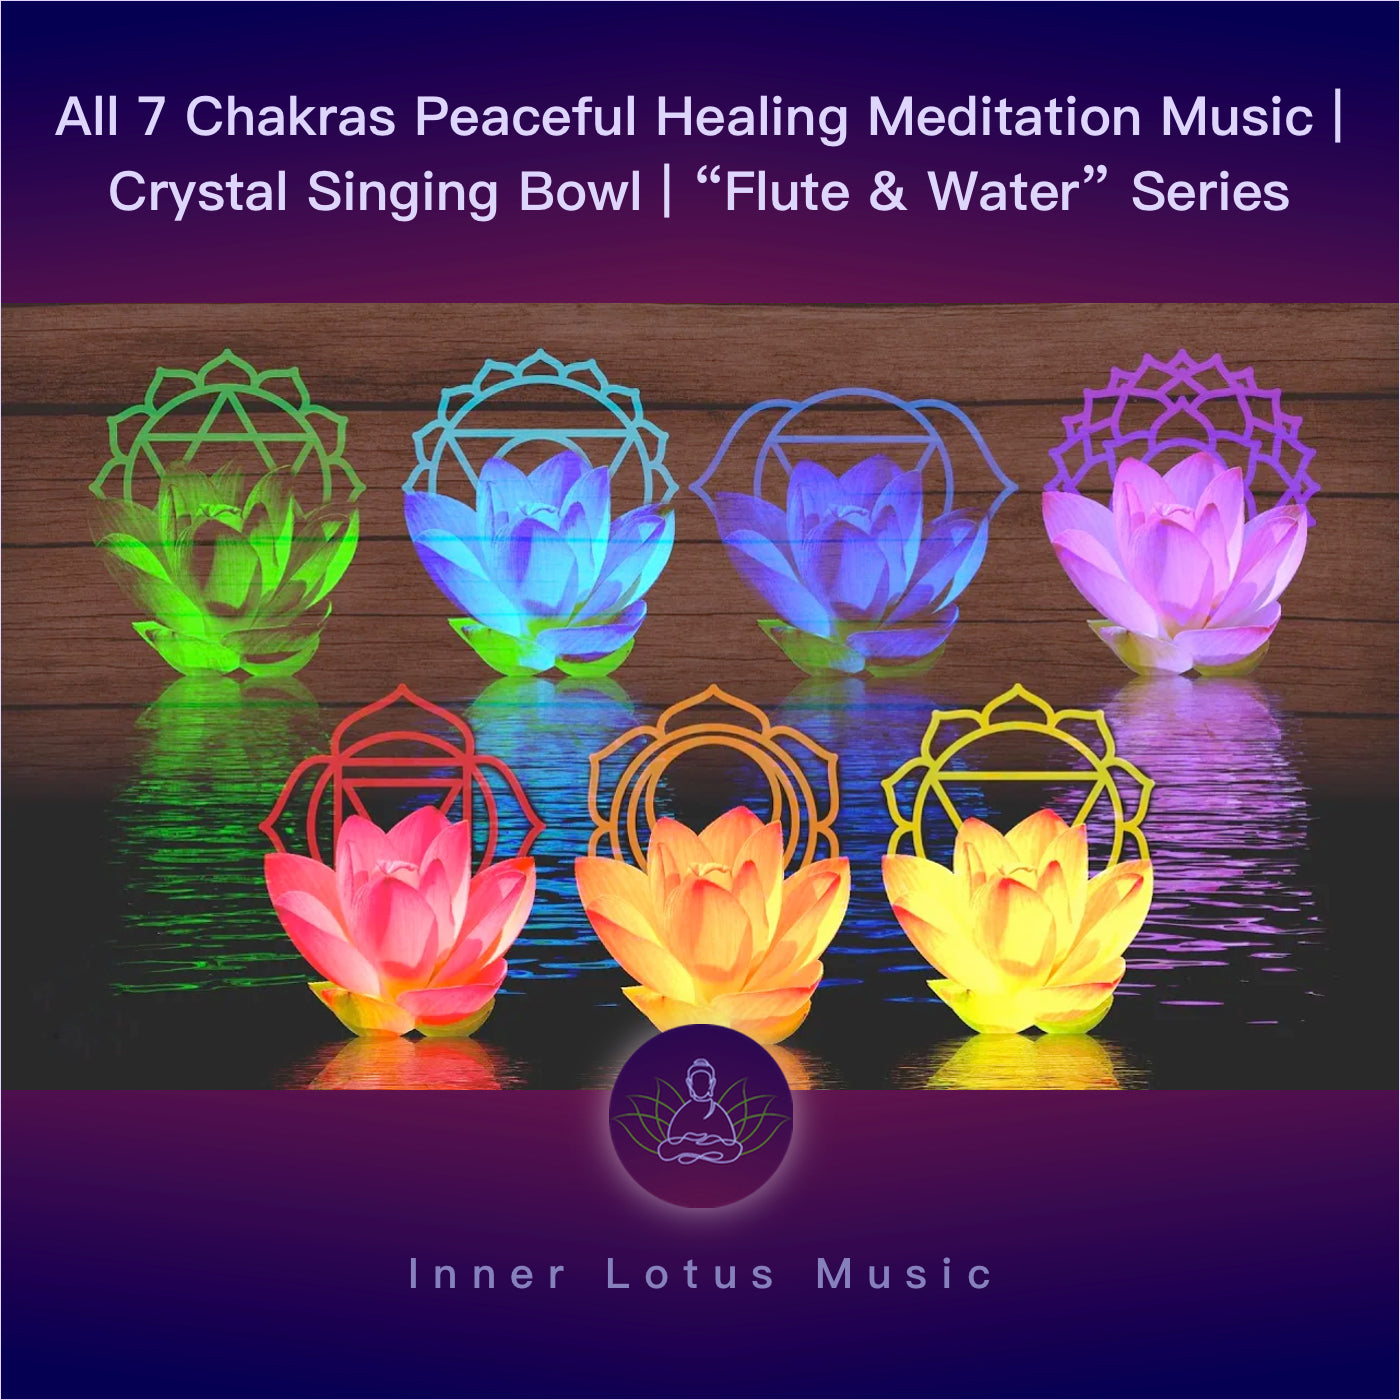 All 7 Chakras Peaceful Healing Meditation Music | Crystal Singing Bowl | “Flute & Water” Series